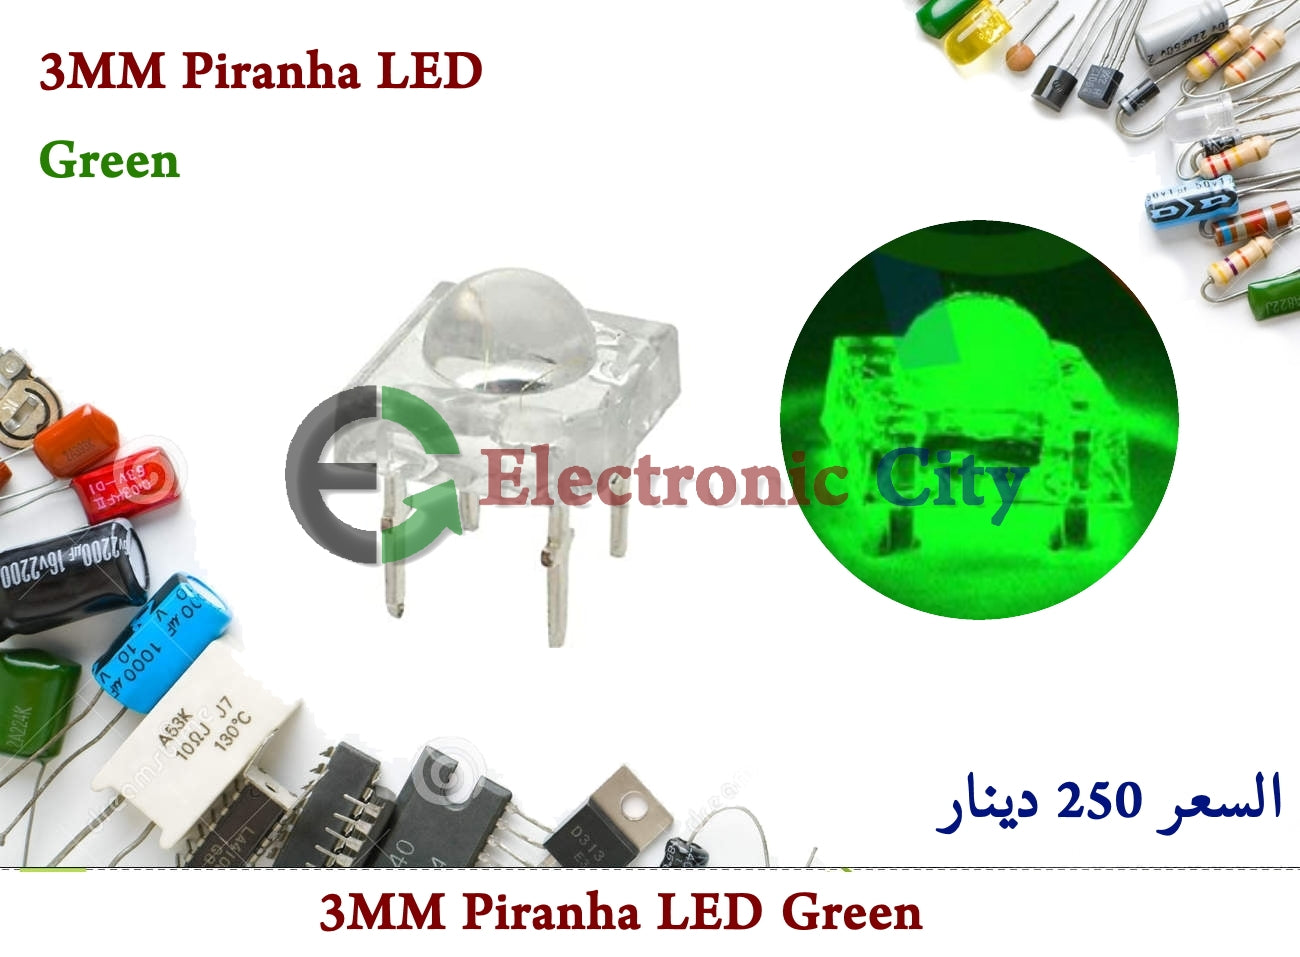 3MM Piranha LED Green